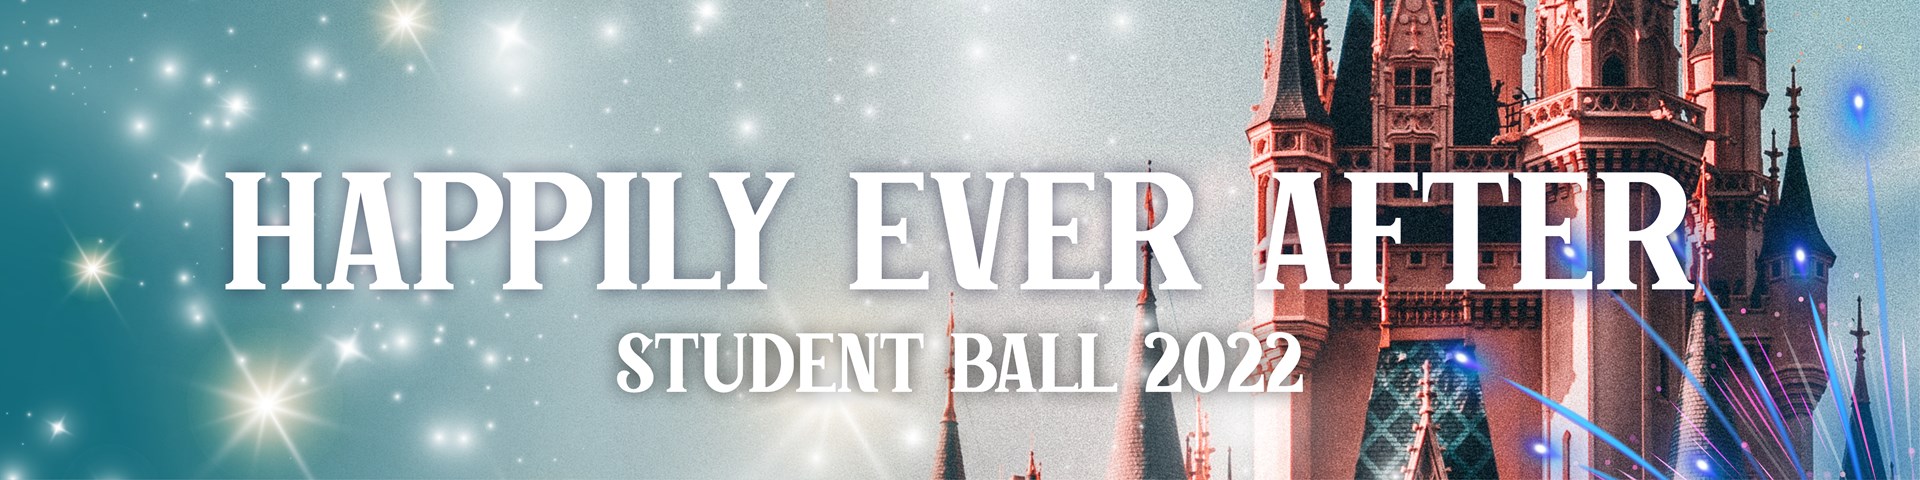 2022 Student Ball